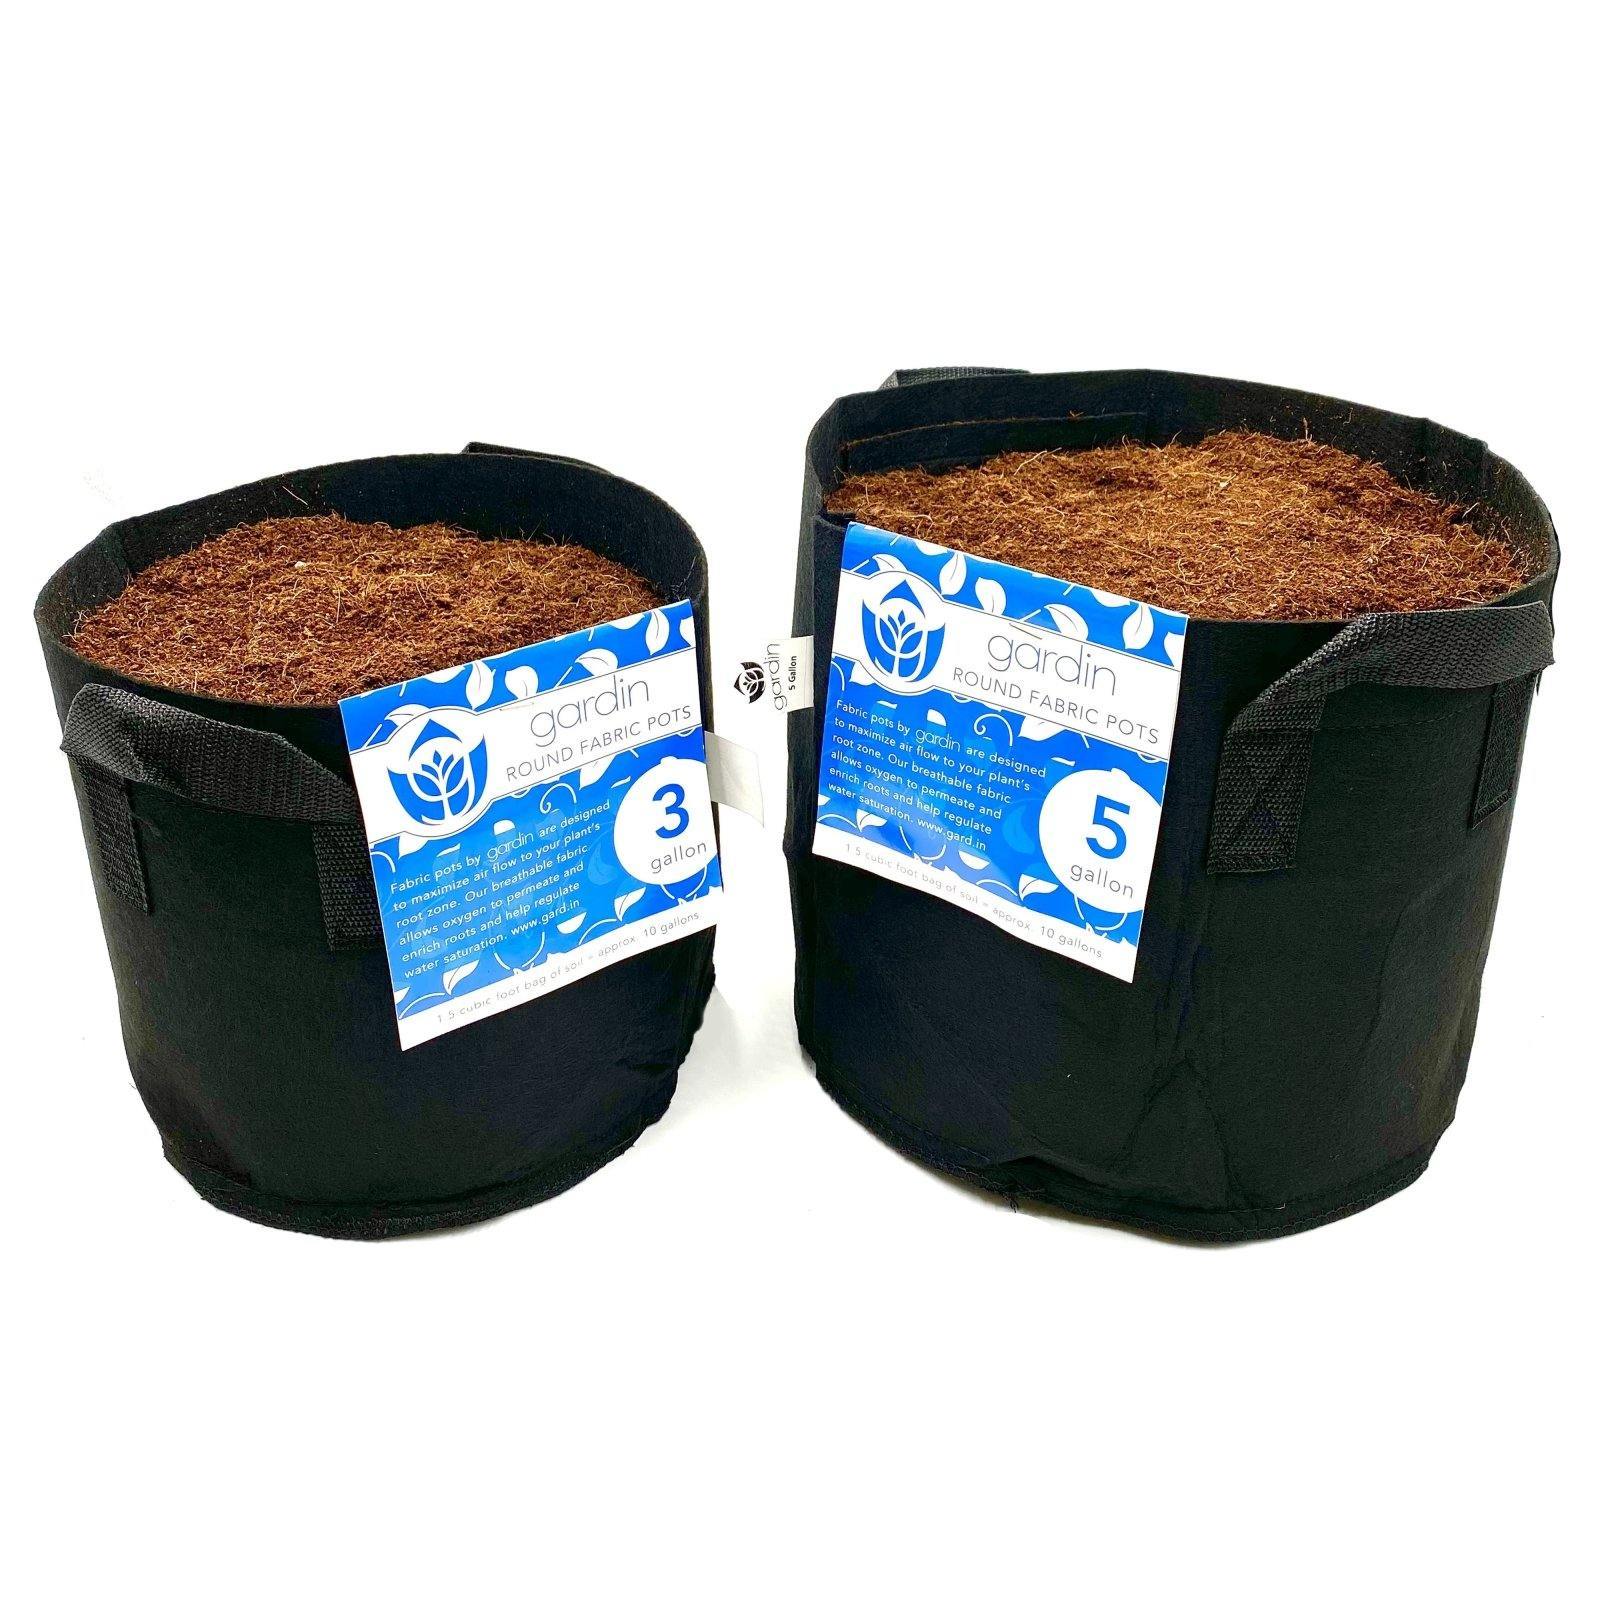 Containers - Gardin Premium Fabric Pots - Handles - Gardin Warehouse